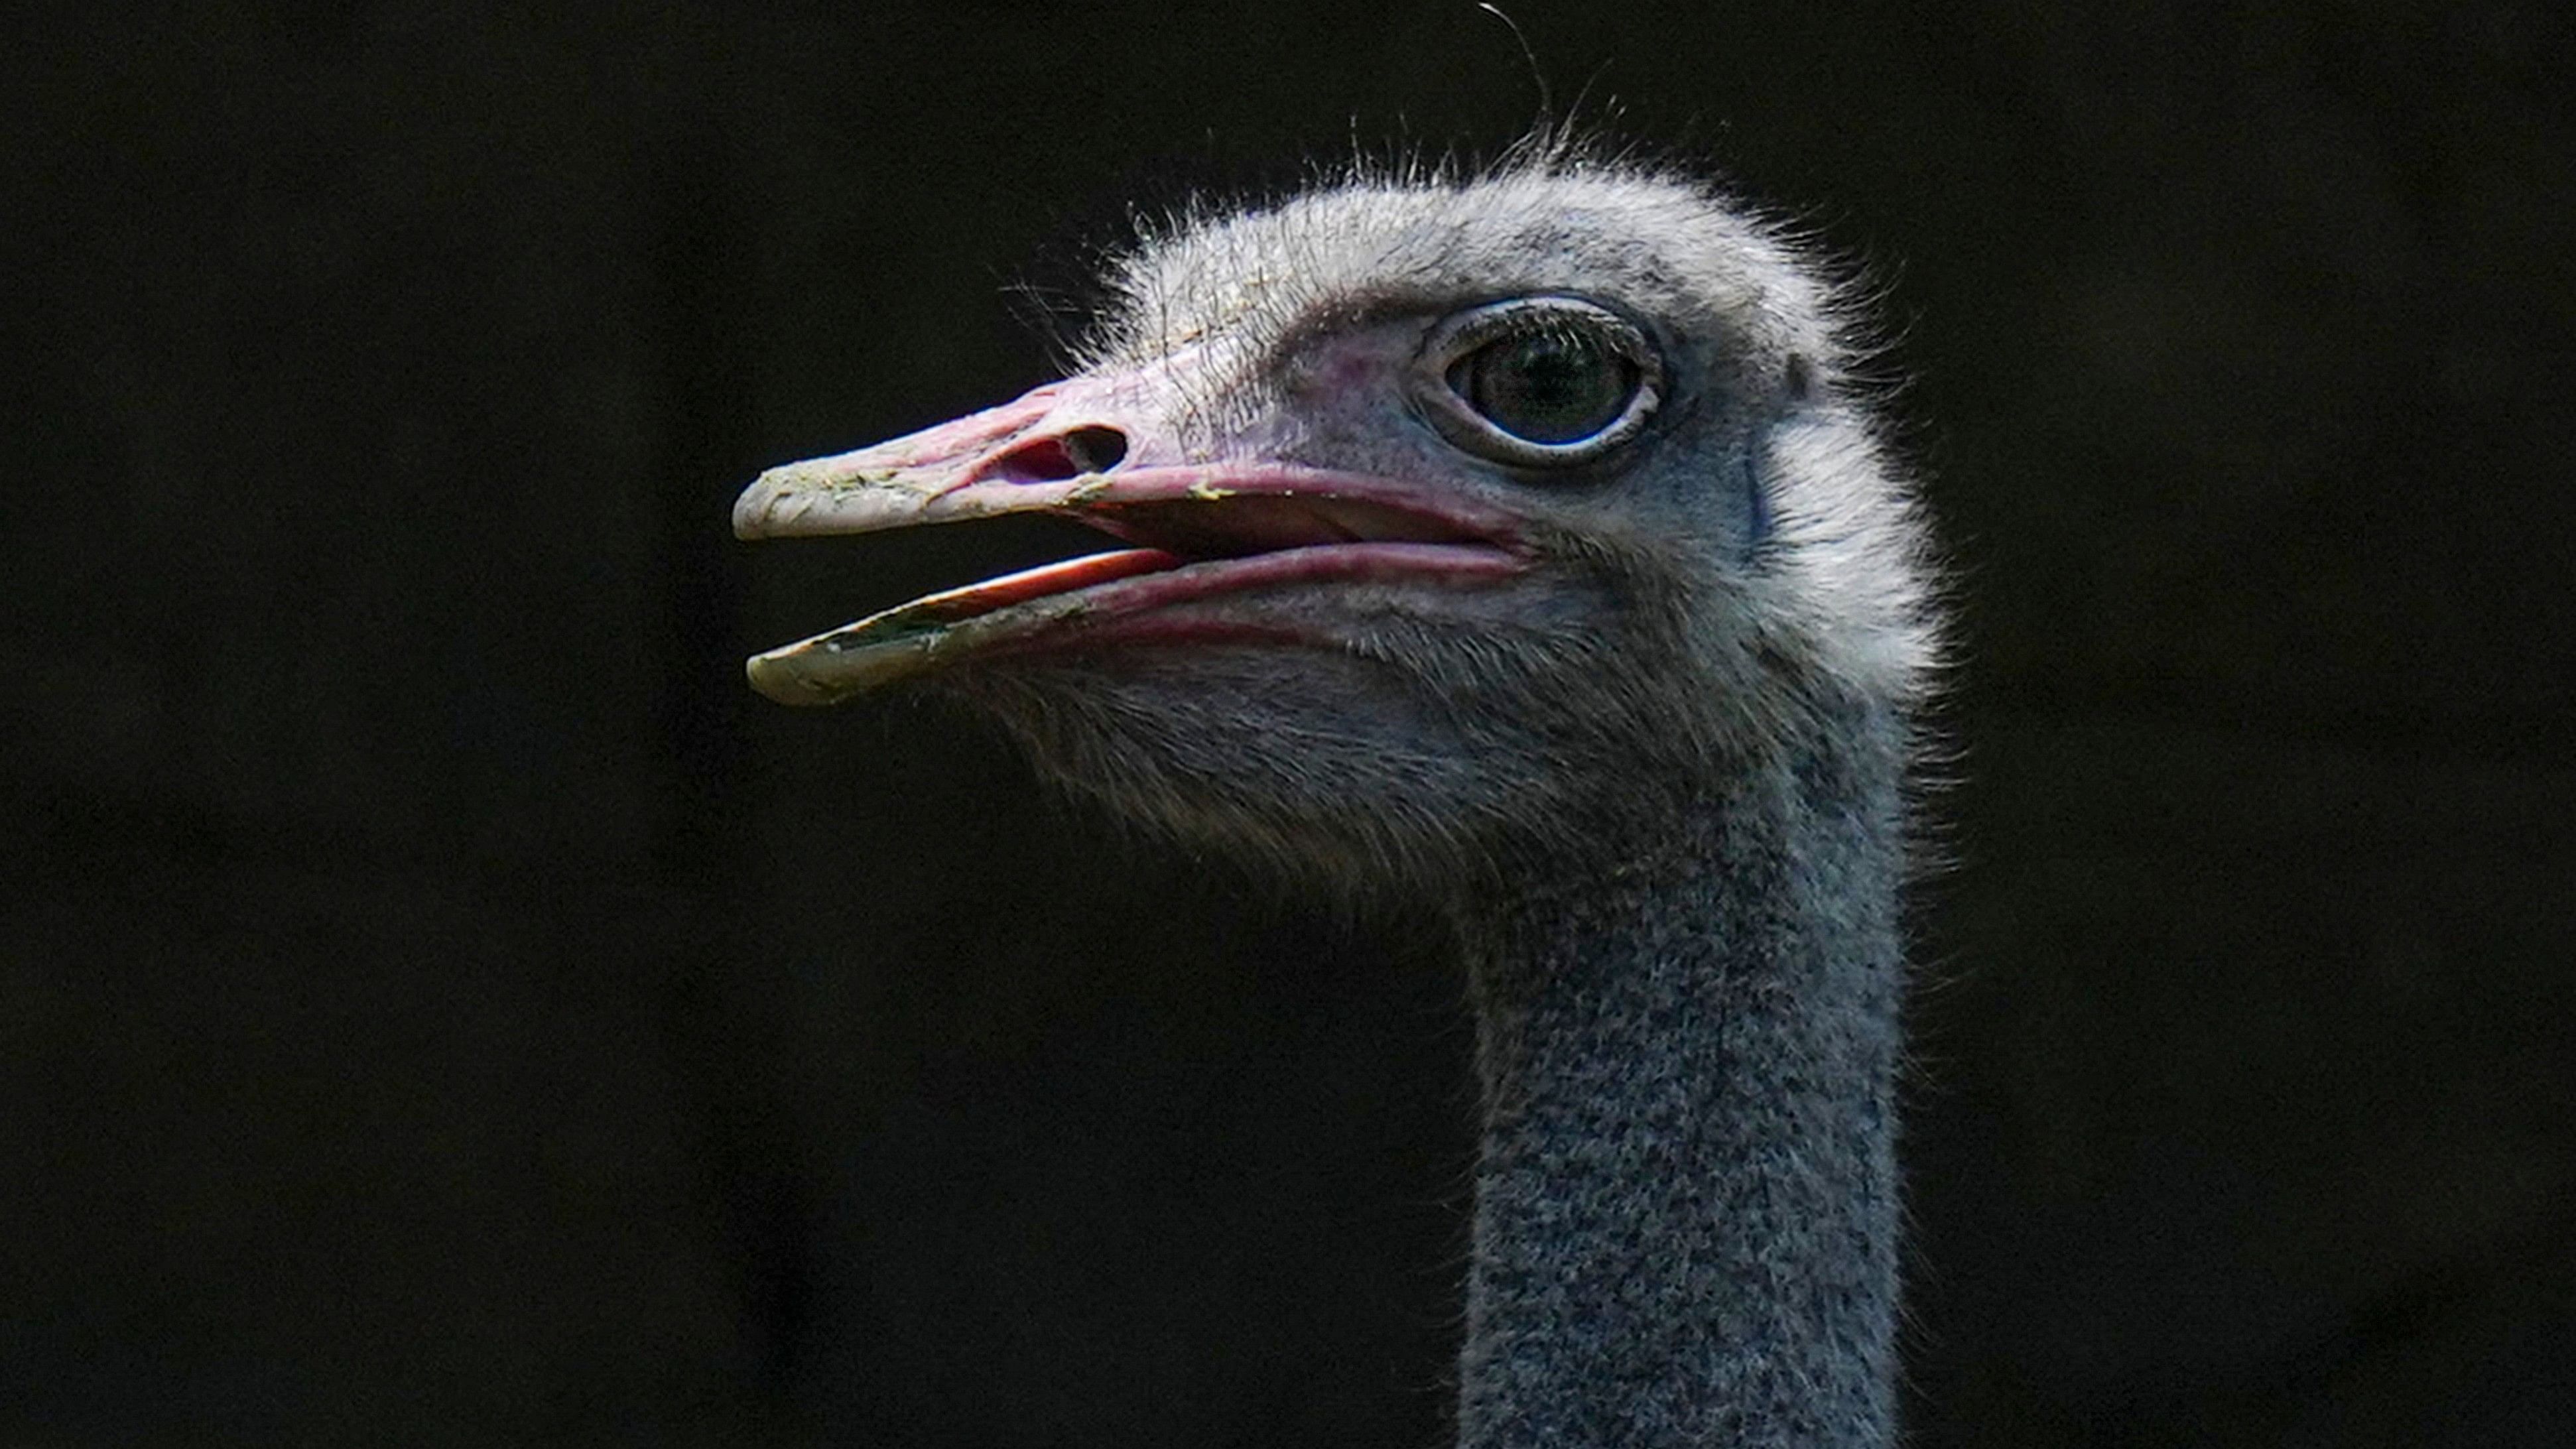 <div class="paragraphs"><p>Representative image showing an ostrich</p></div>